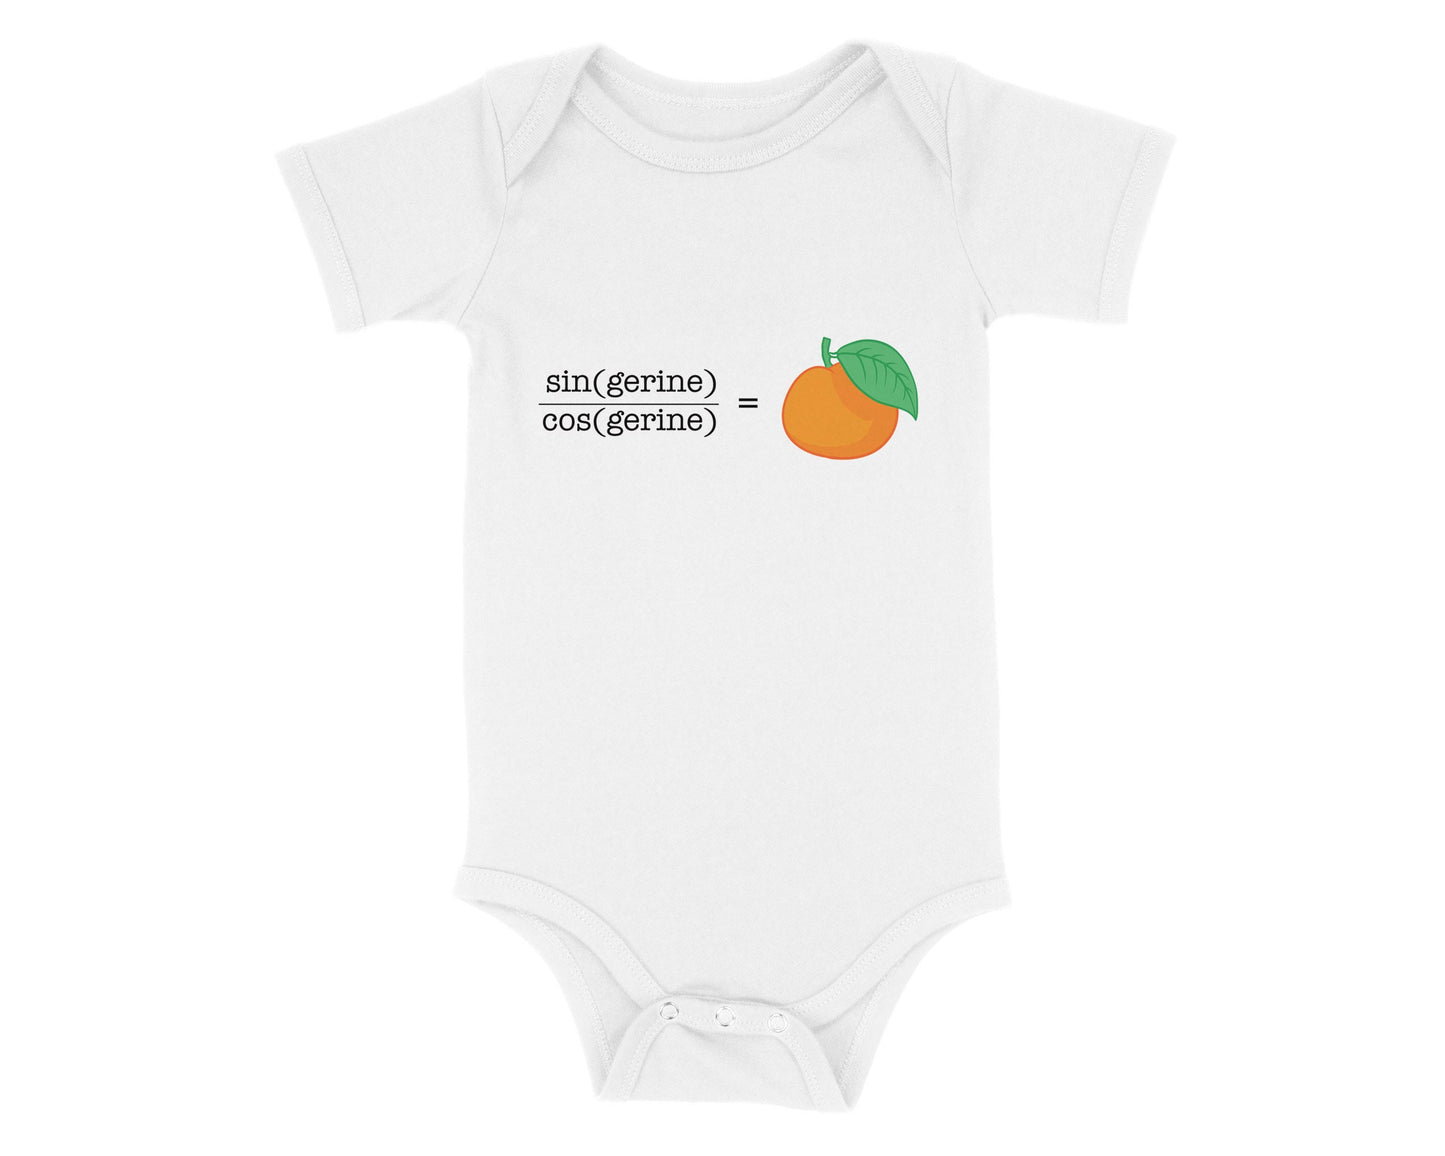 Sin(gerine) / cos(gerine) = Tangerine Math Joke Baby Onepiece